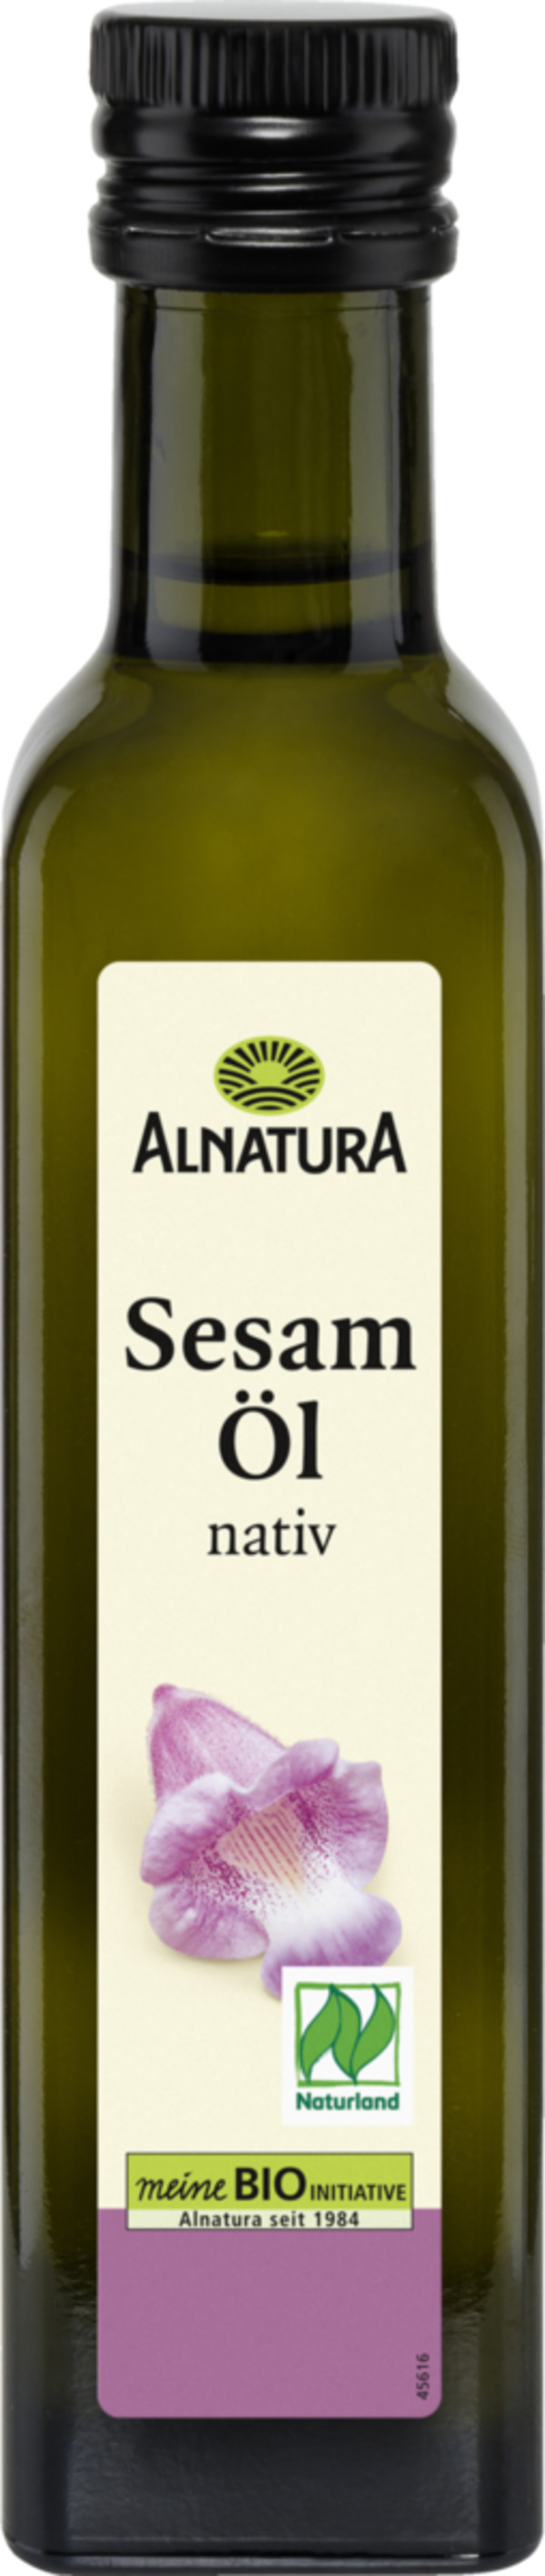 Bild 1 von Alnatura Bio Sesam Öl